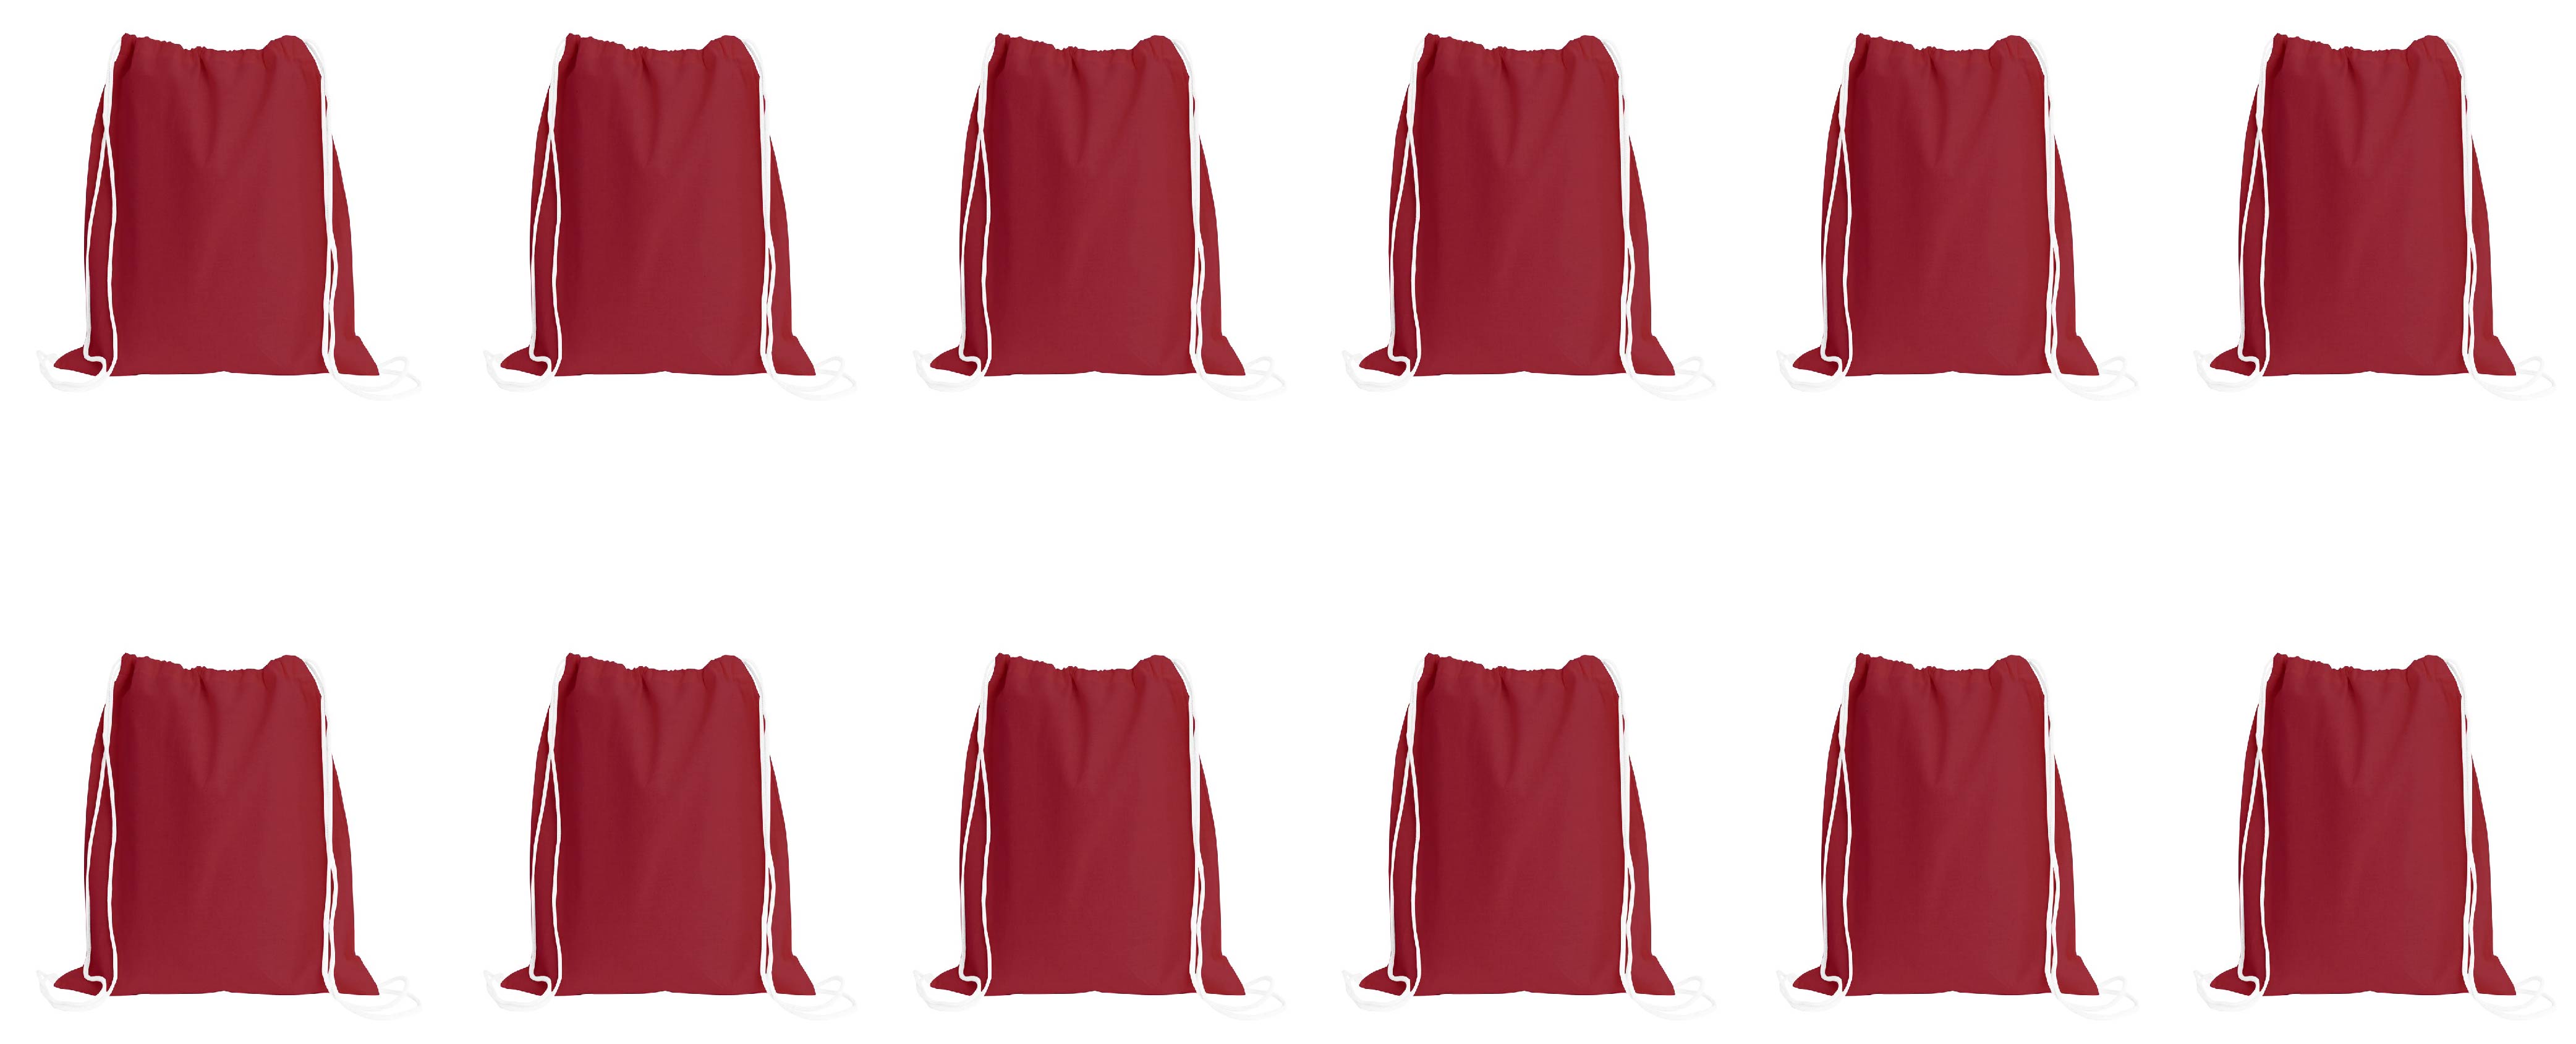 Sport Drawstring Bag, 100% Cotton, Red Color